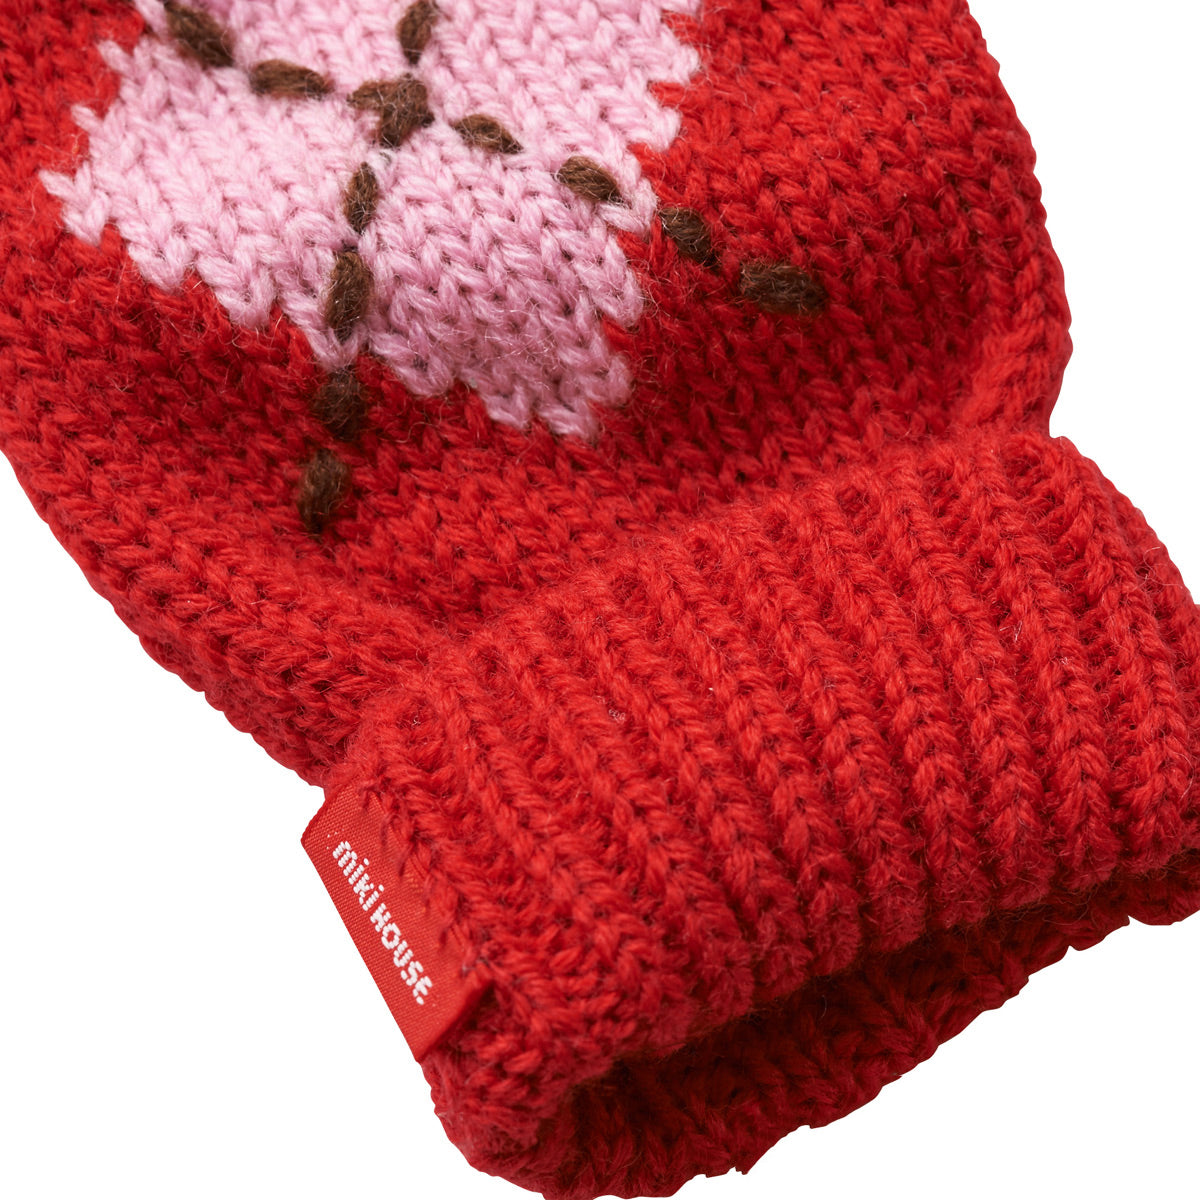 Usako Argyle Knit Gift Set with a gift box